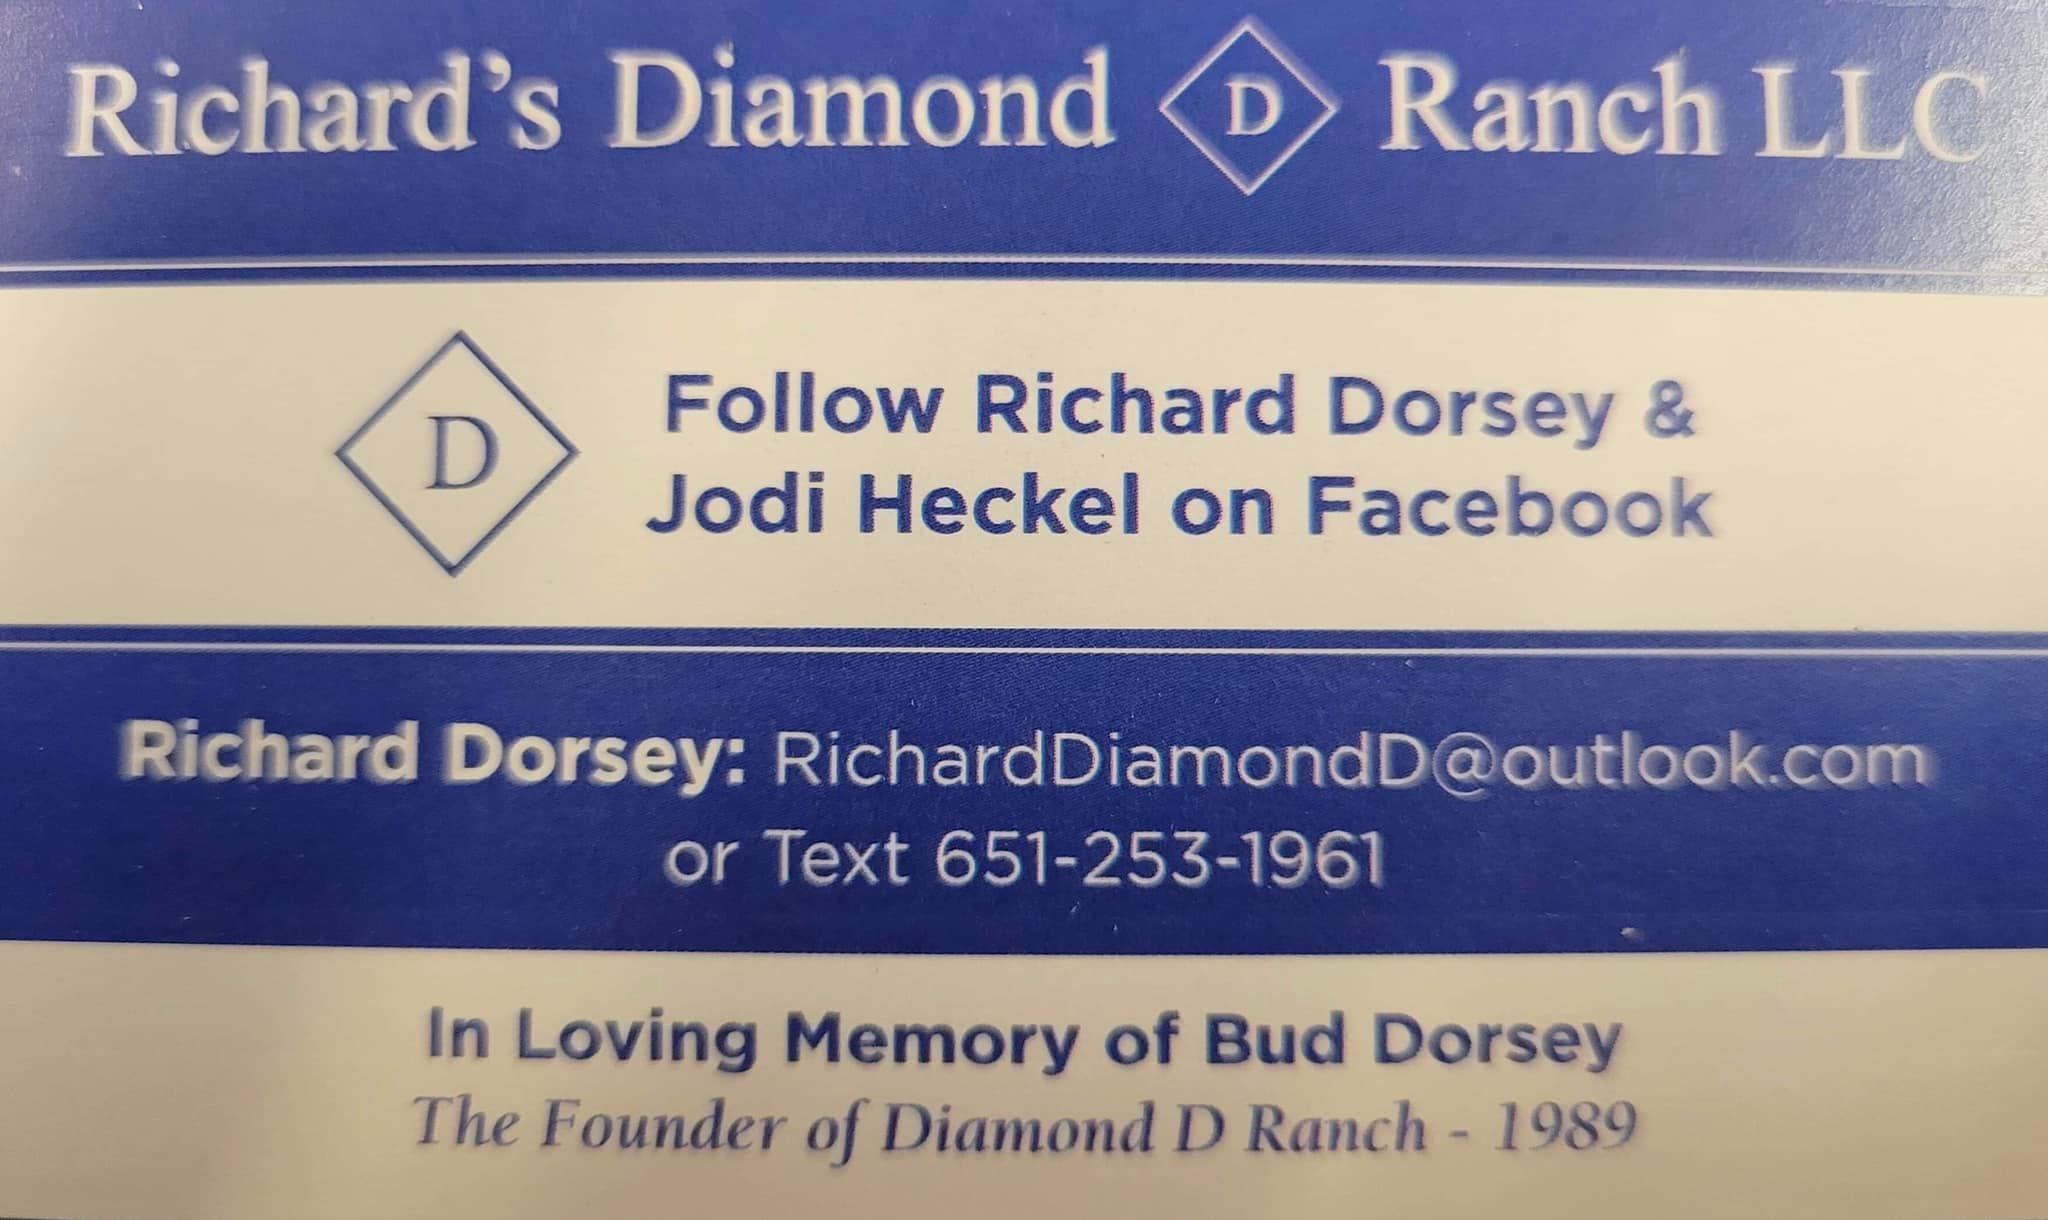 Richard's Diamond D Ranch LLC